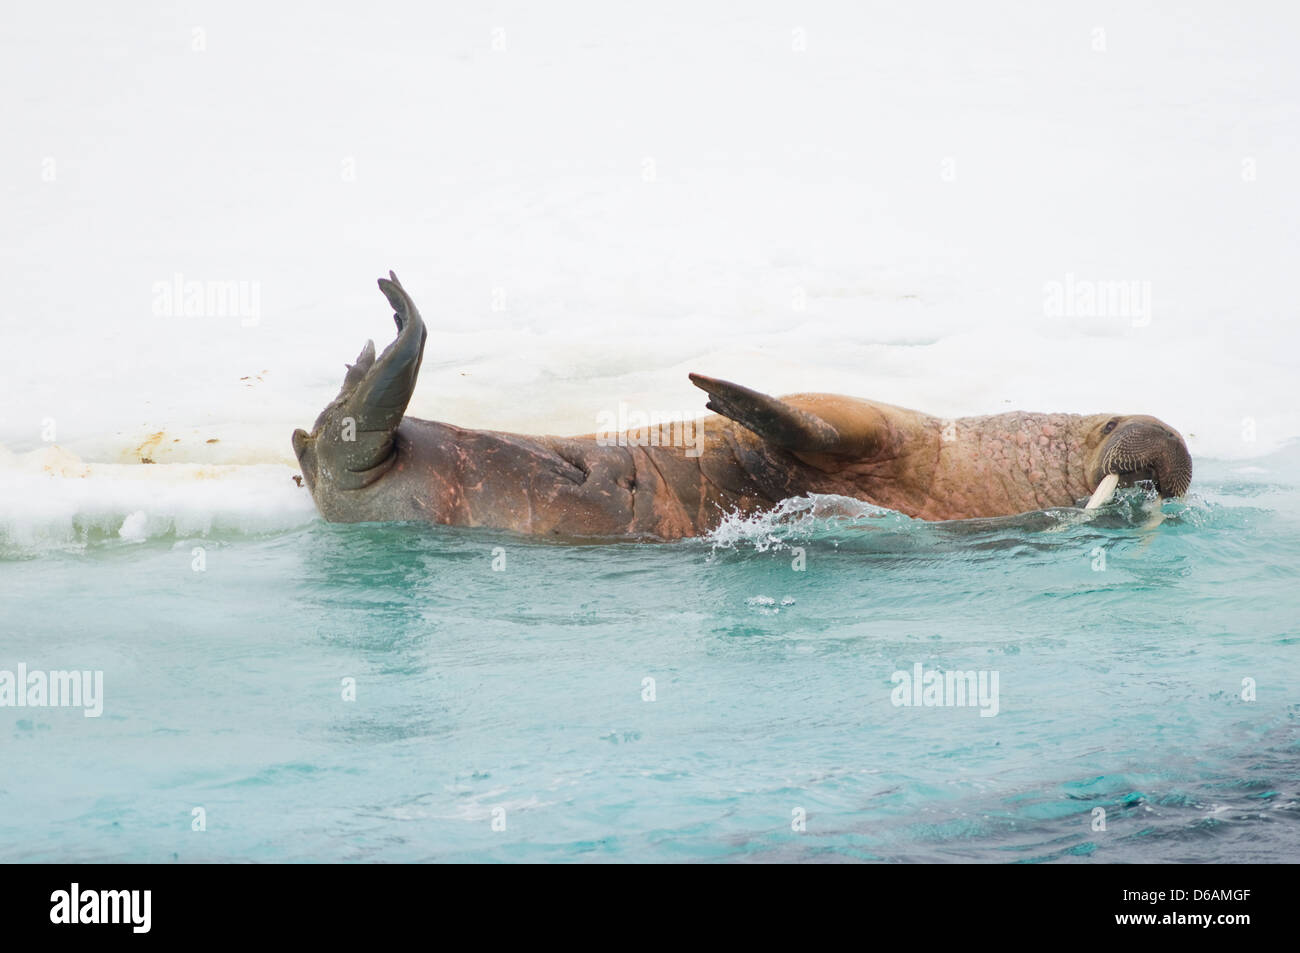 La Morsa, Rosmarus Del Odobenus, Mamífero Marino Flippered Grande, En Agua  Azul, Svalbard, Noruega Retrato Del Detalle Del Animal Imagen de archivo -  Imagen de detalle, paquete: 95608779